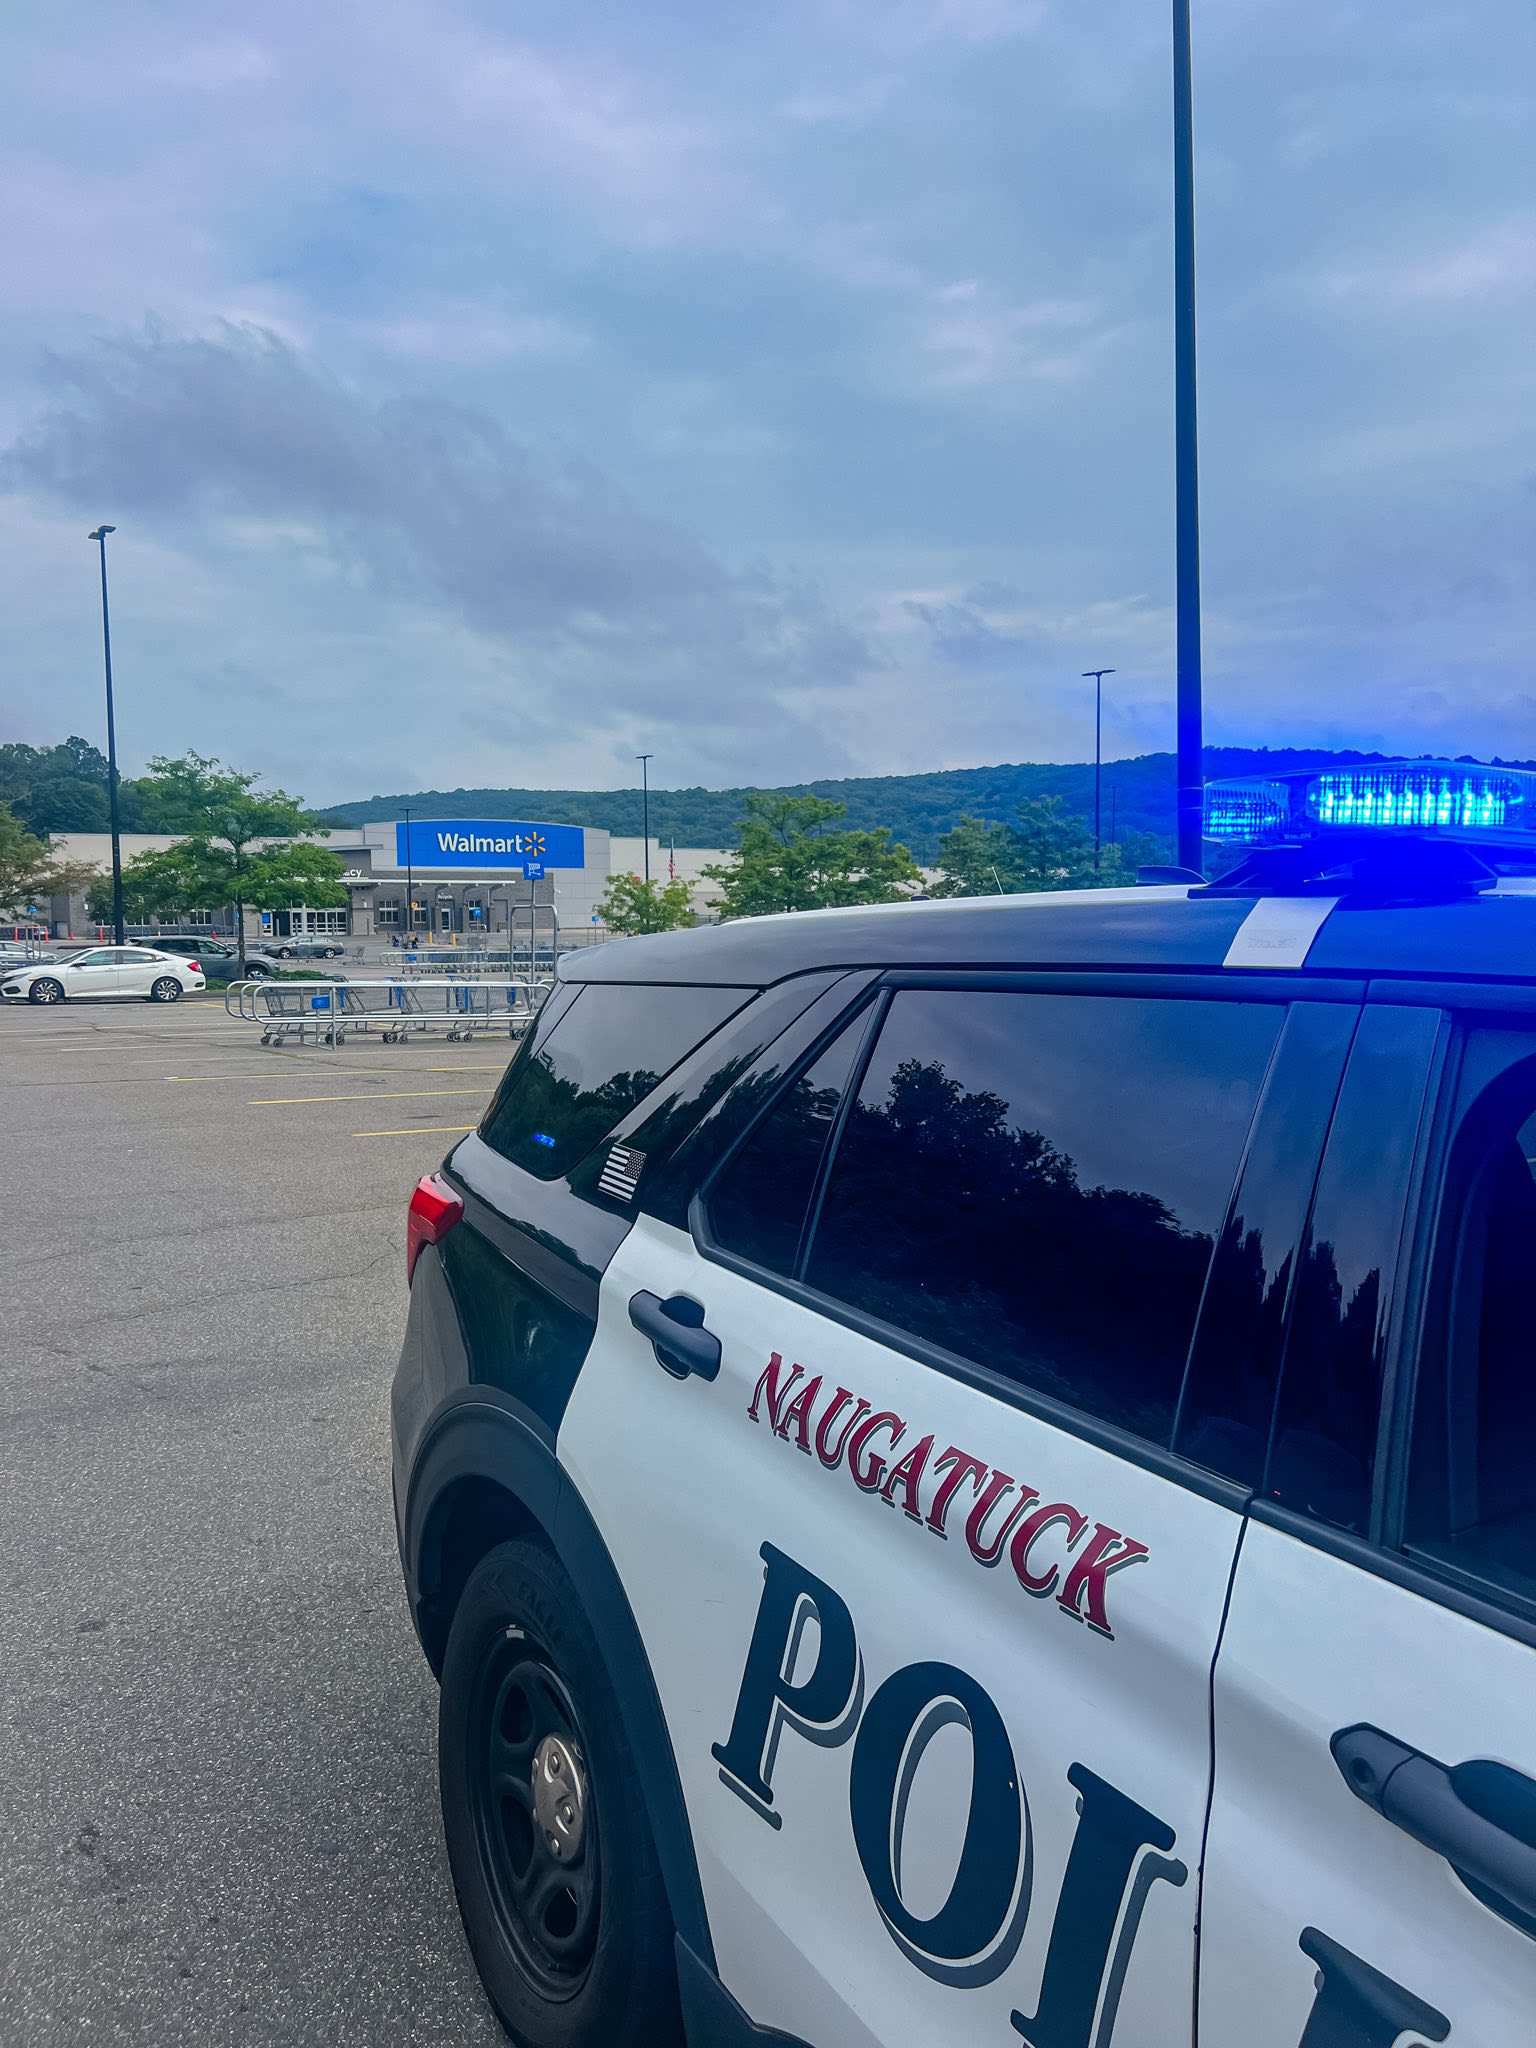 Naugatuck Walmart and Stop & Shop stores reopen following bomb threats, police say